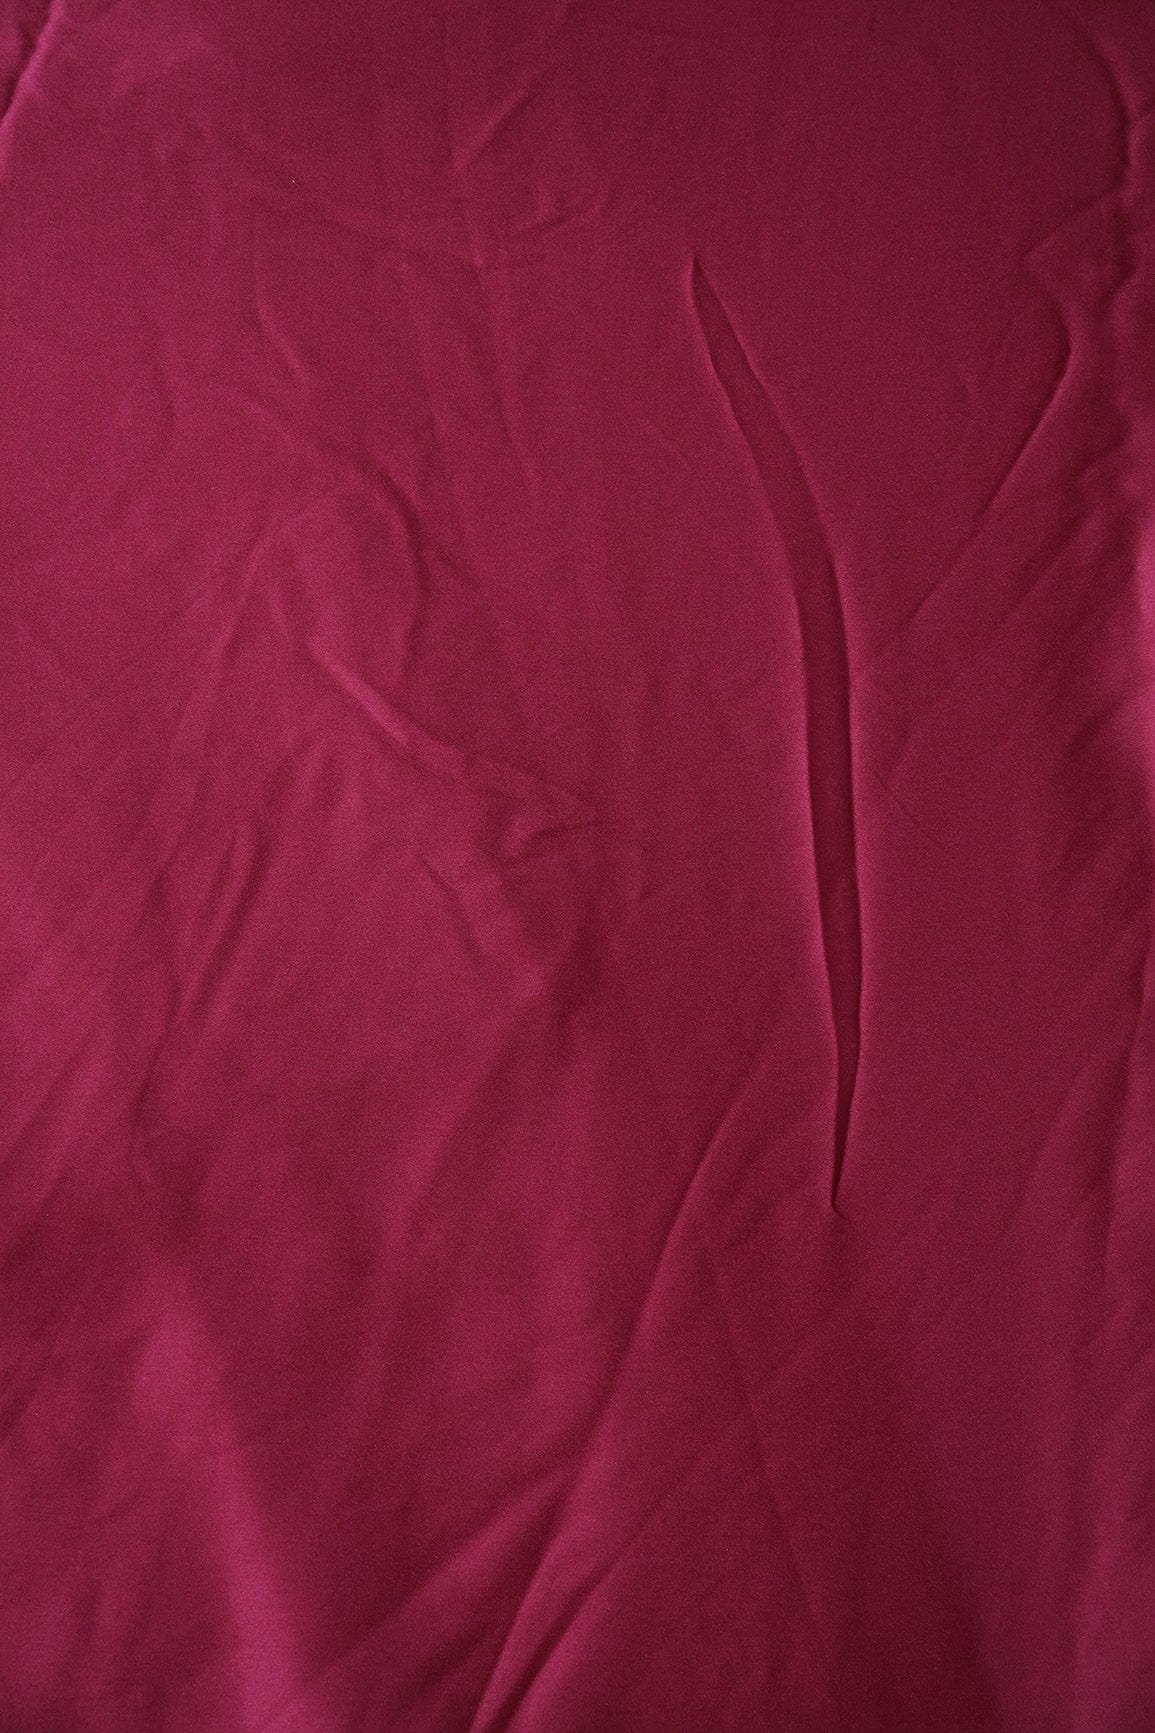 doeraa Plain Fabrics Maroon Dyed Georgette Satin Fabric